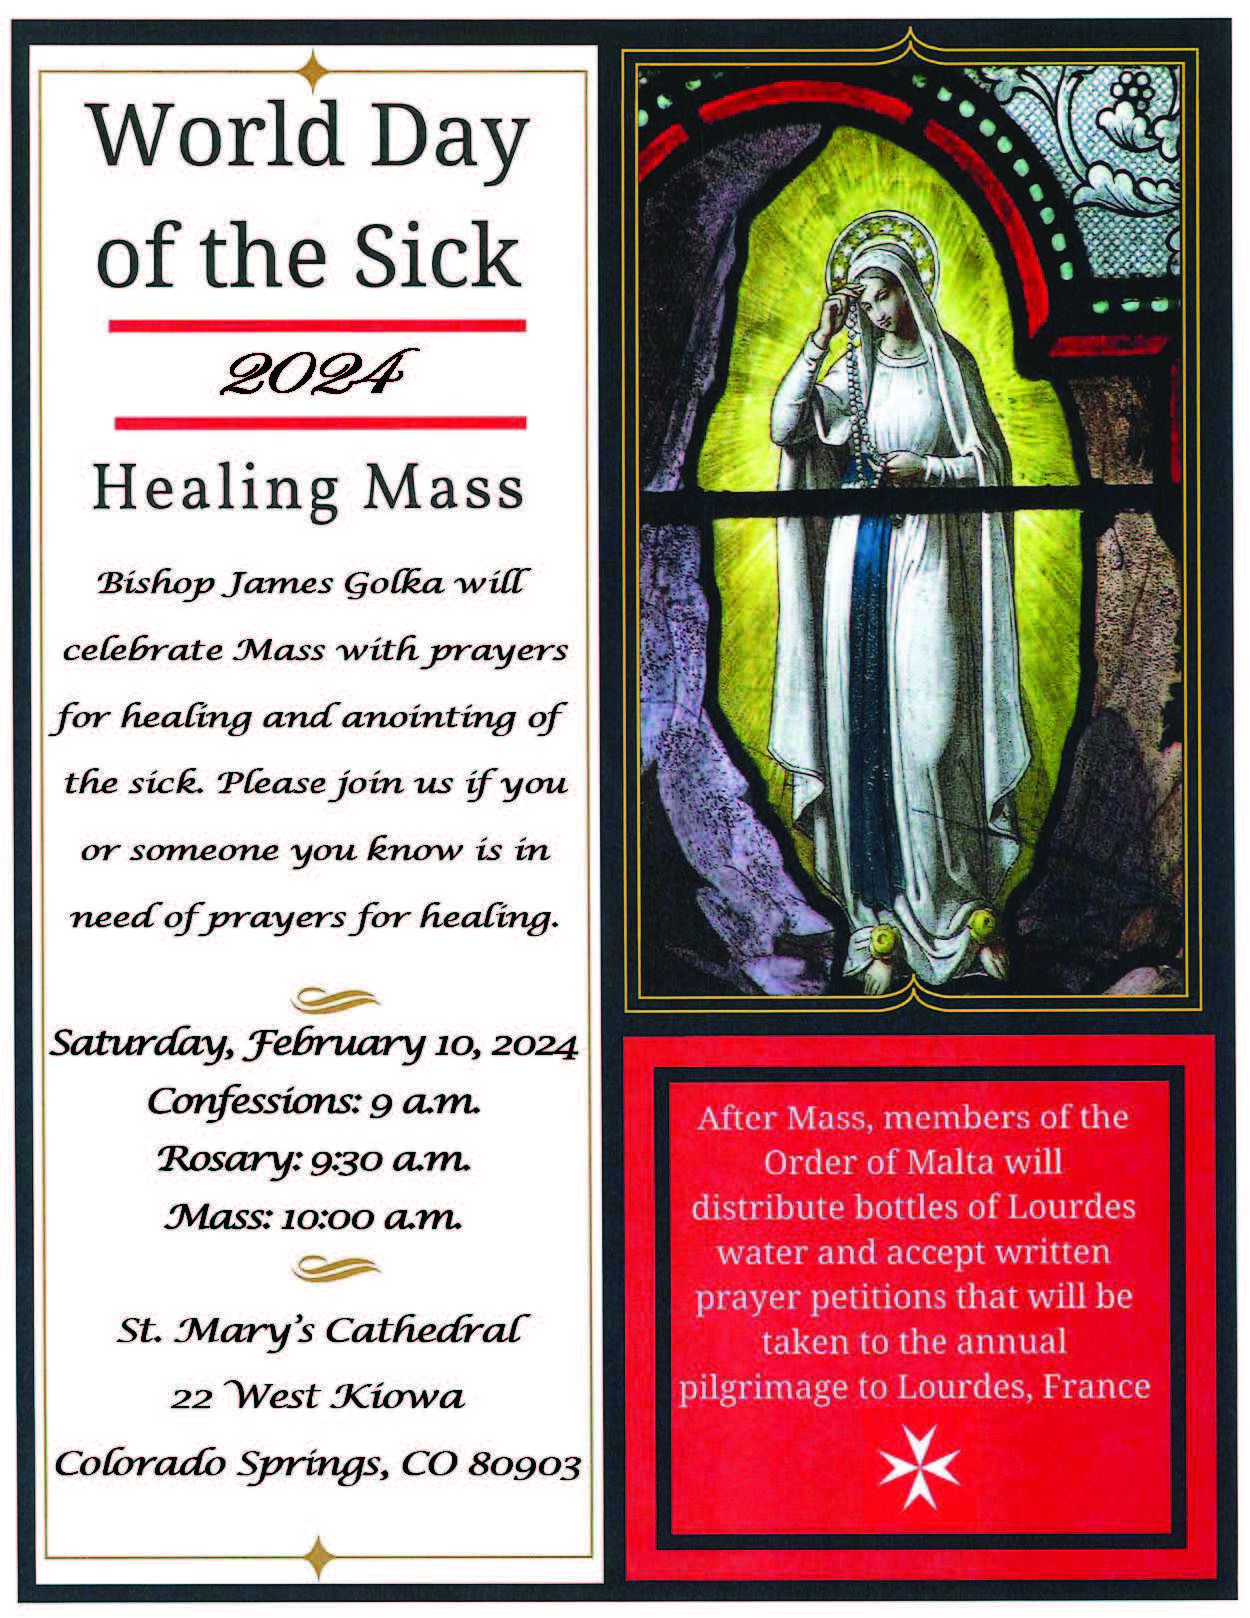 World Day of the Sick 2024 Healing Mass